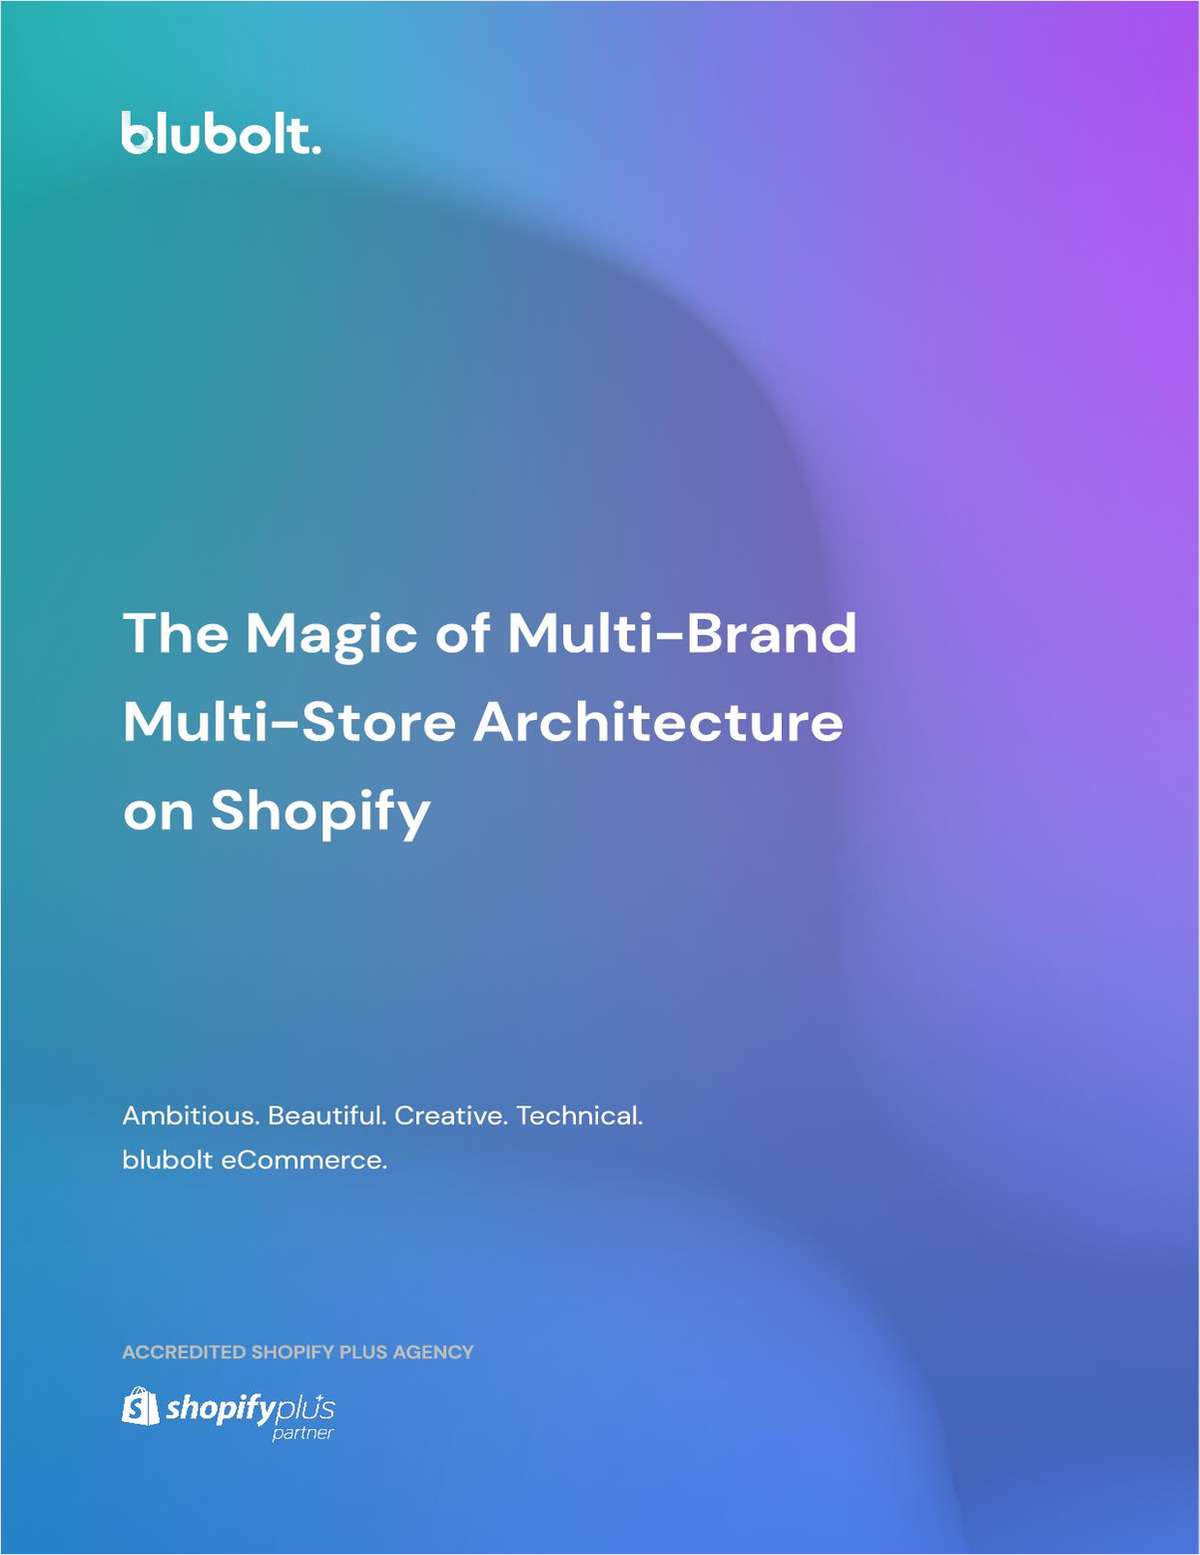 The Magic of Multi-Brand Multi-Store Architecture on Shopify